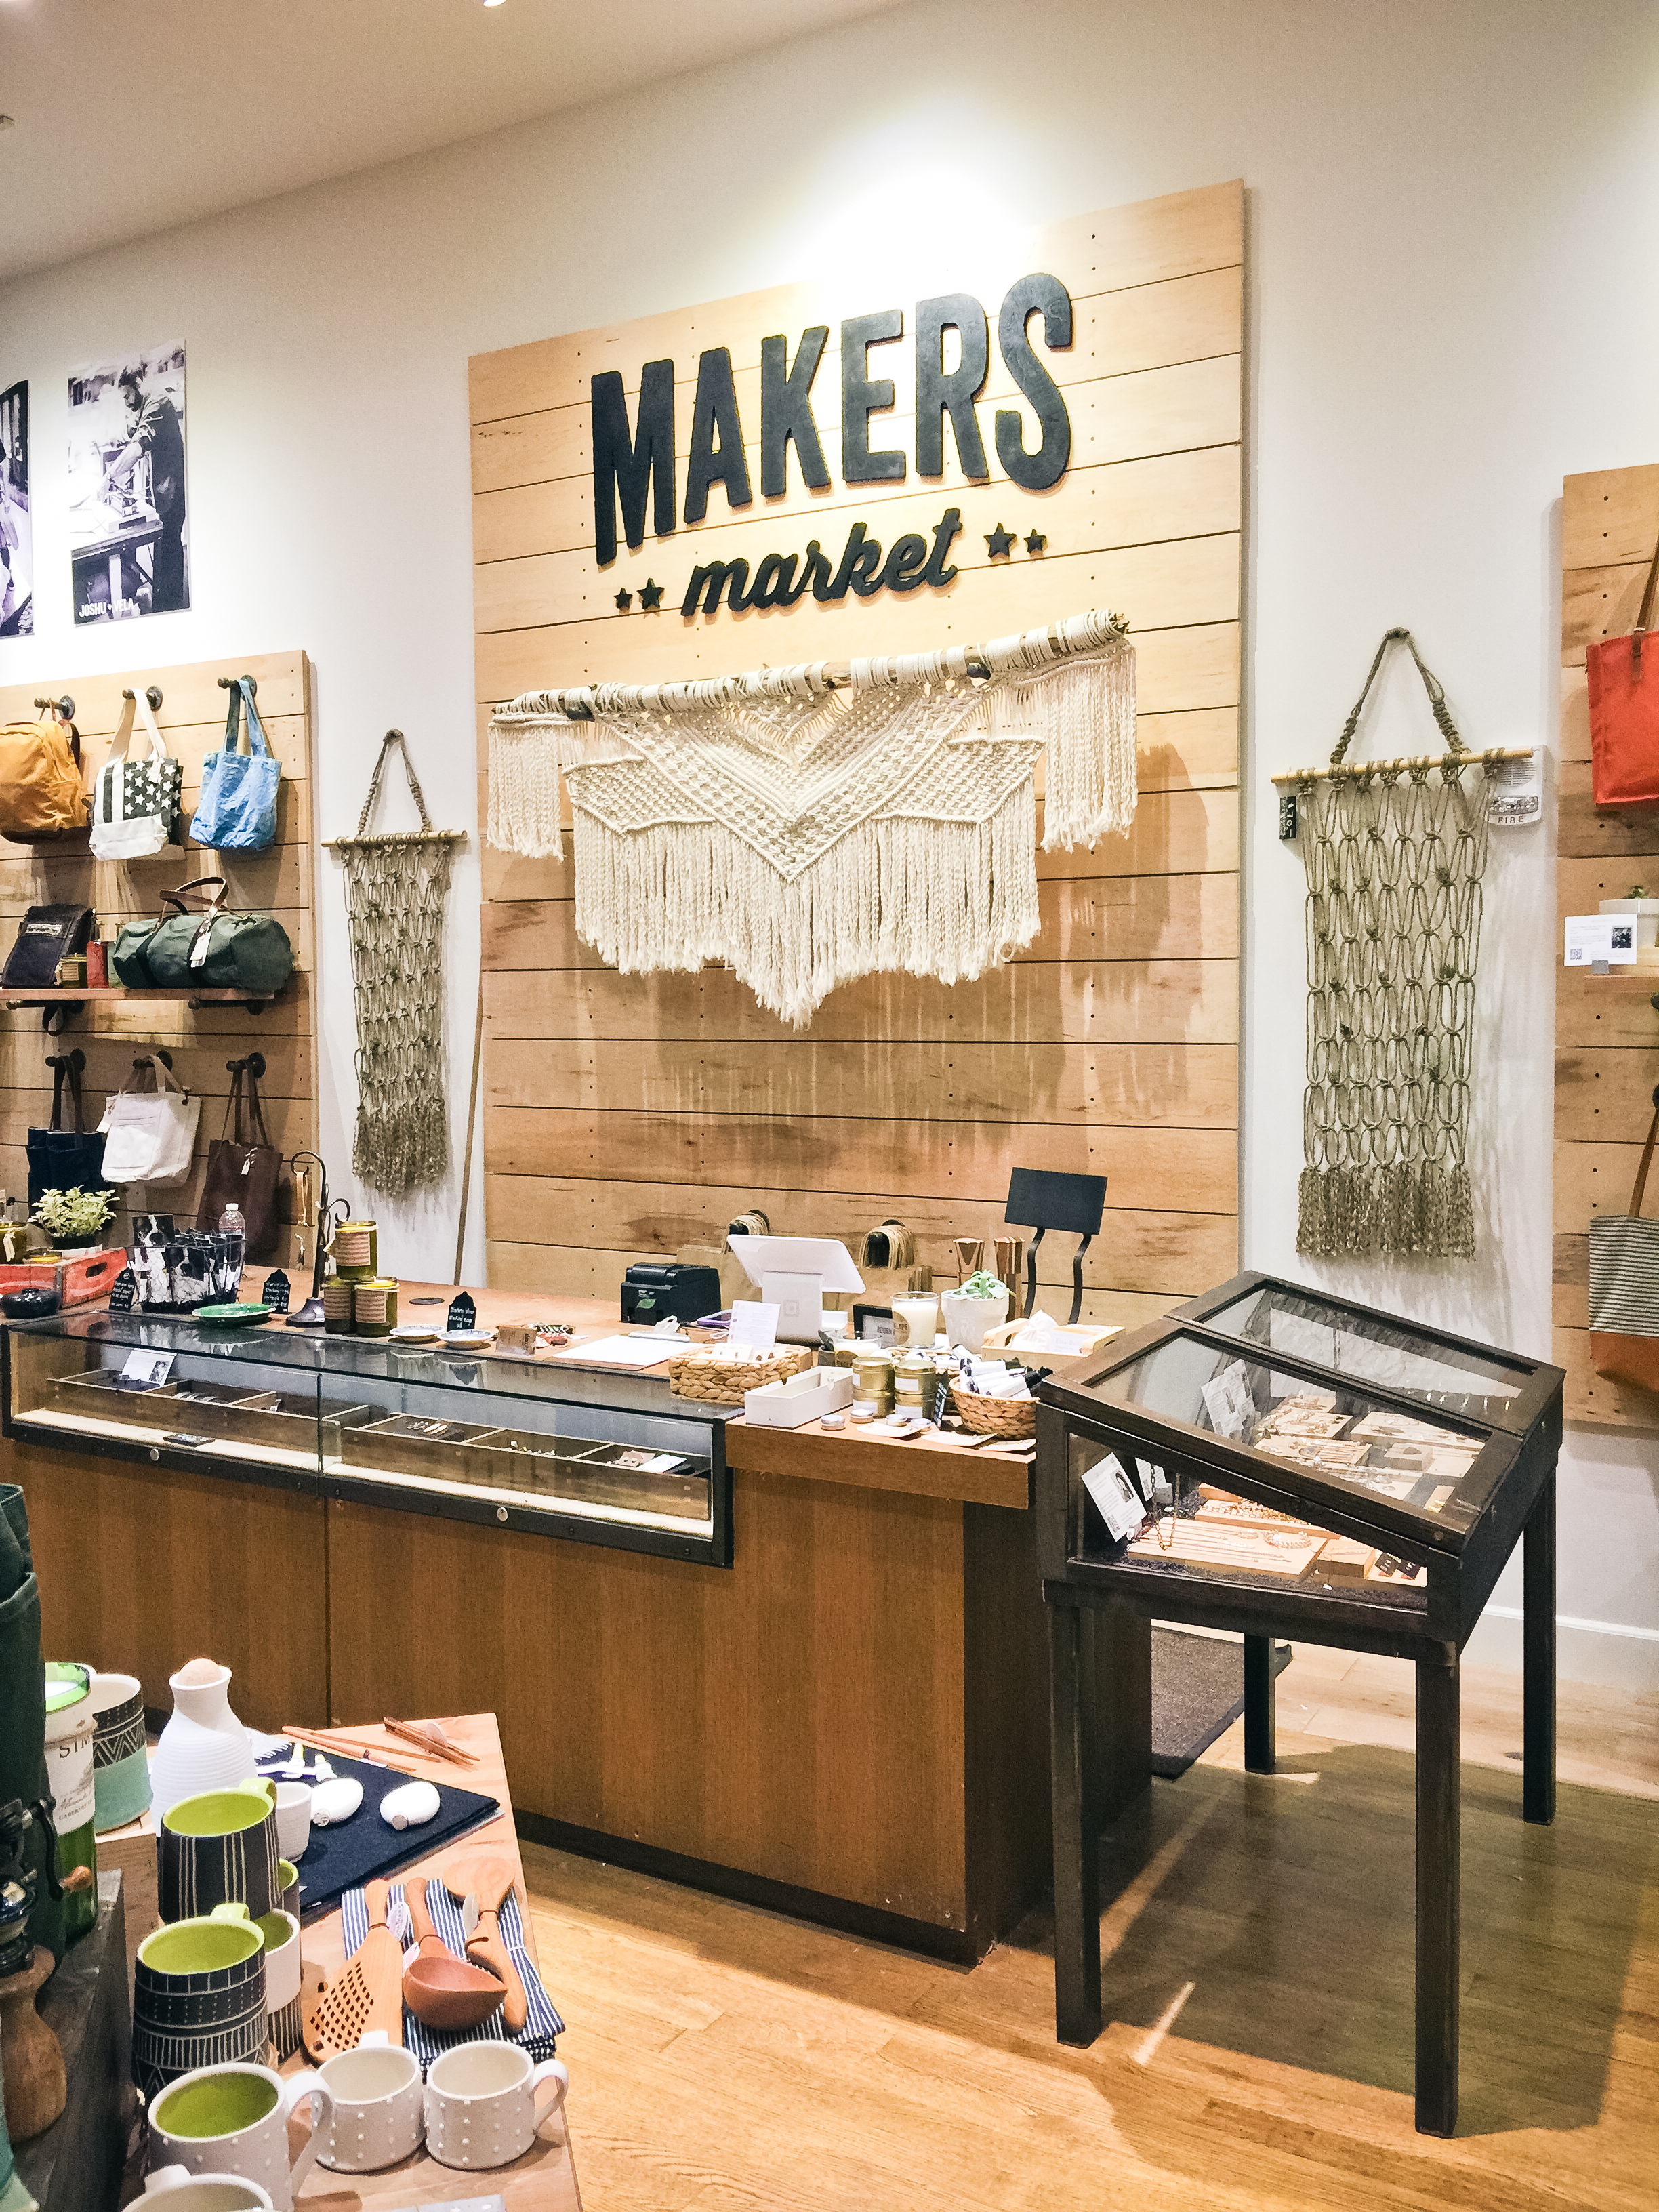 Maker's Market